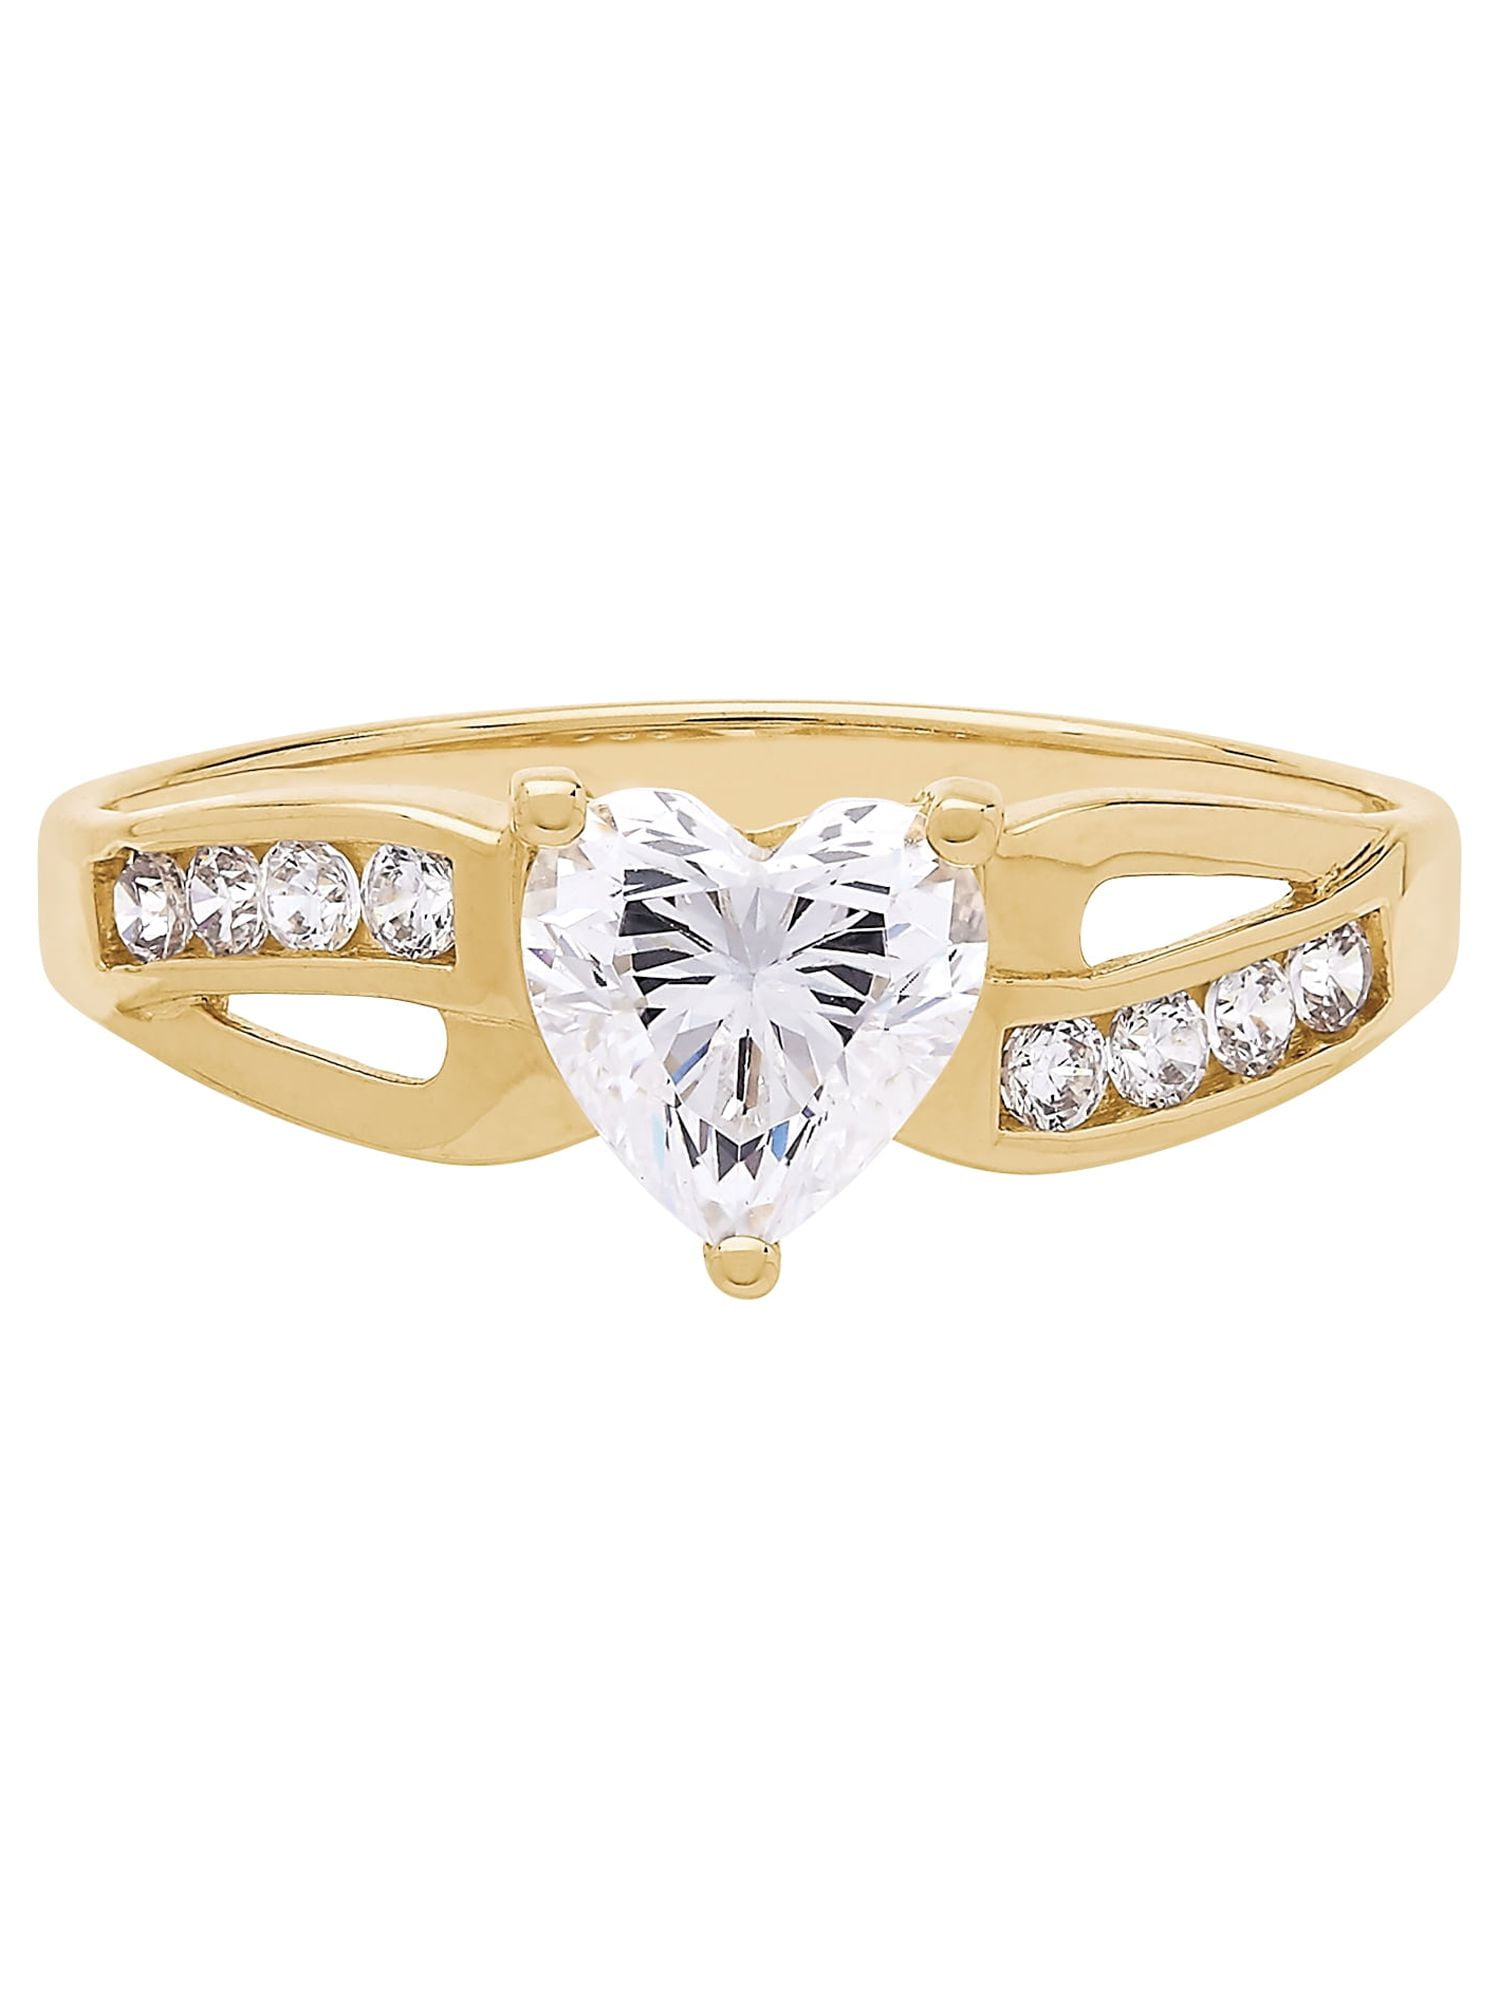 Heart Shaped Diamond Halo Engagement Ring 14k Yellow Gold 1ct - DM228